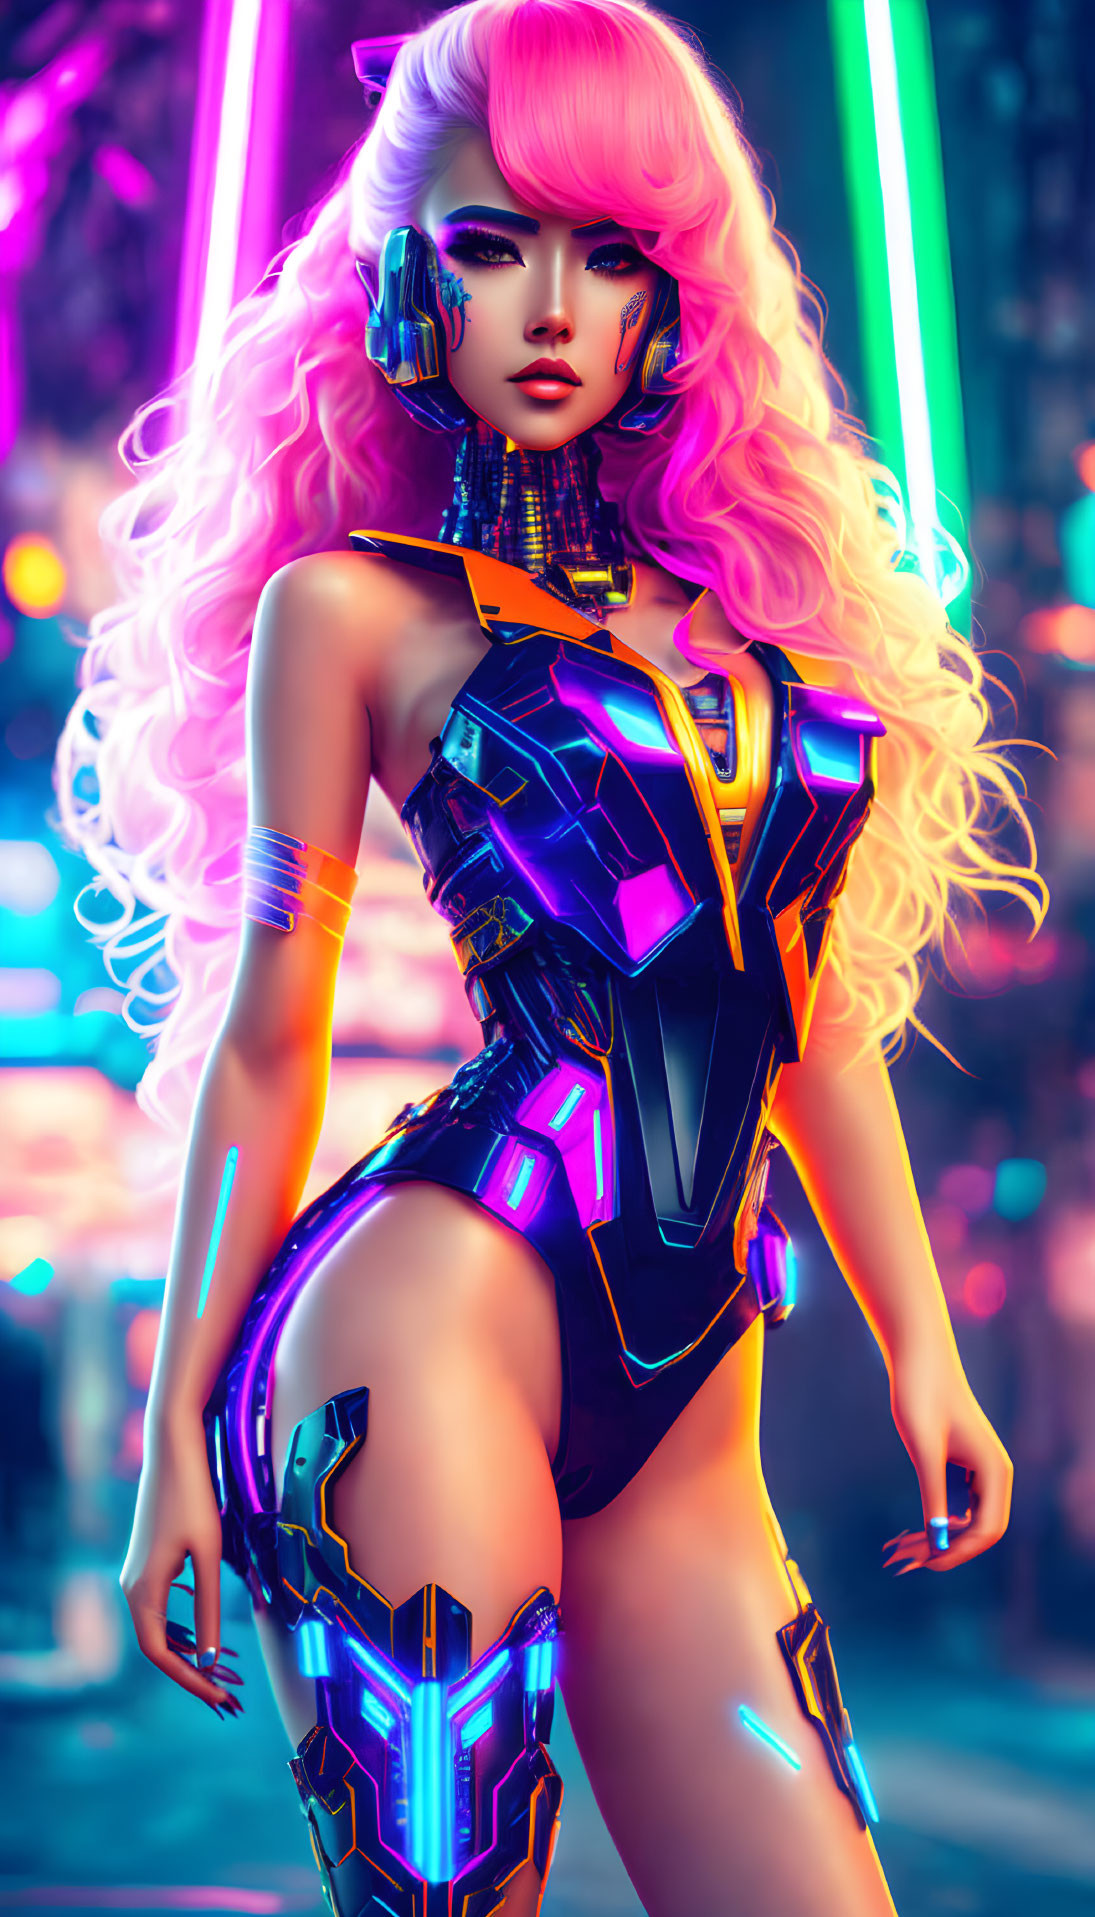 Futuristic woman with pink hair in glowing cybernetic armor in neon-lit urban scene